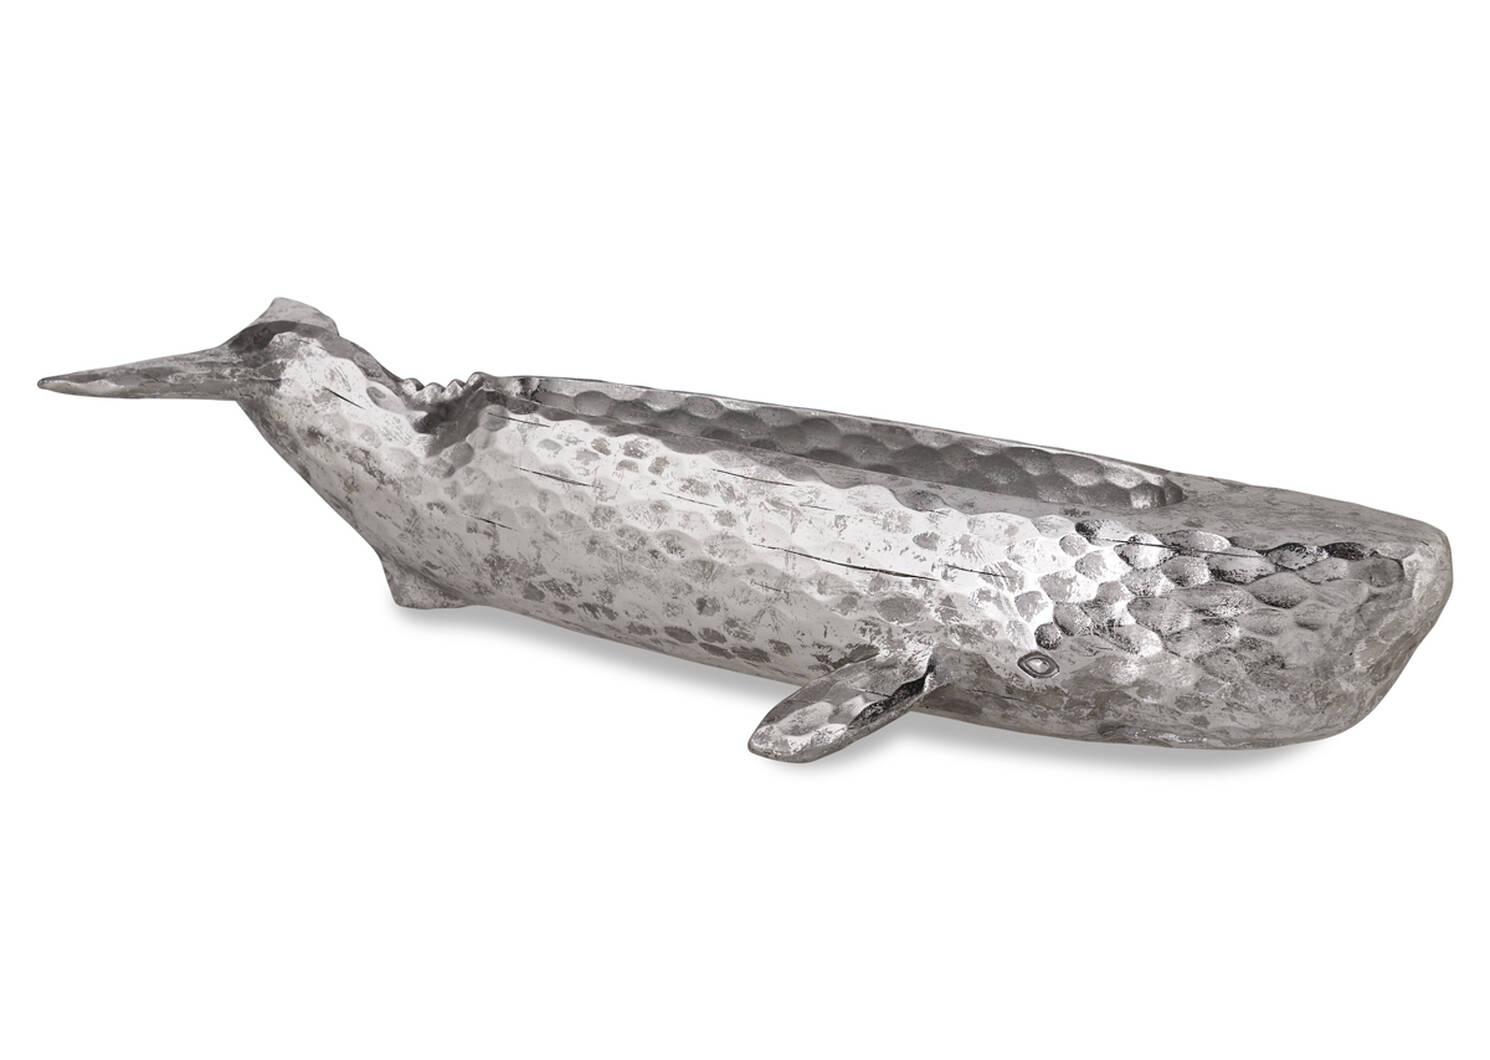 Cachalot Whale Decor Bowl Silver